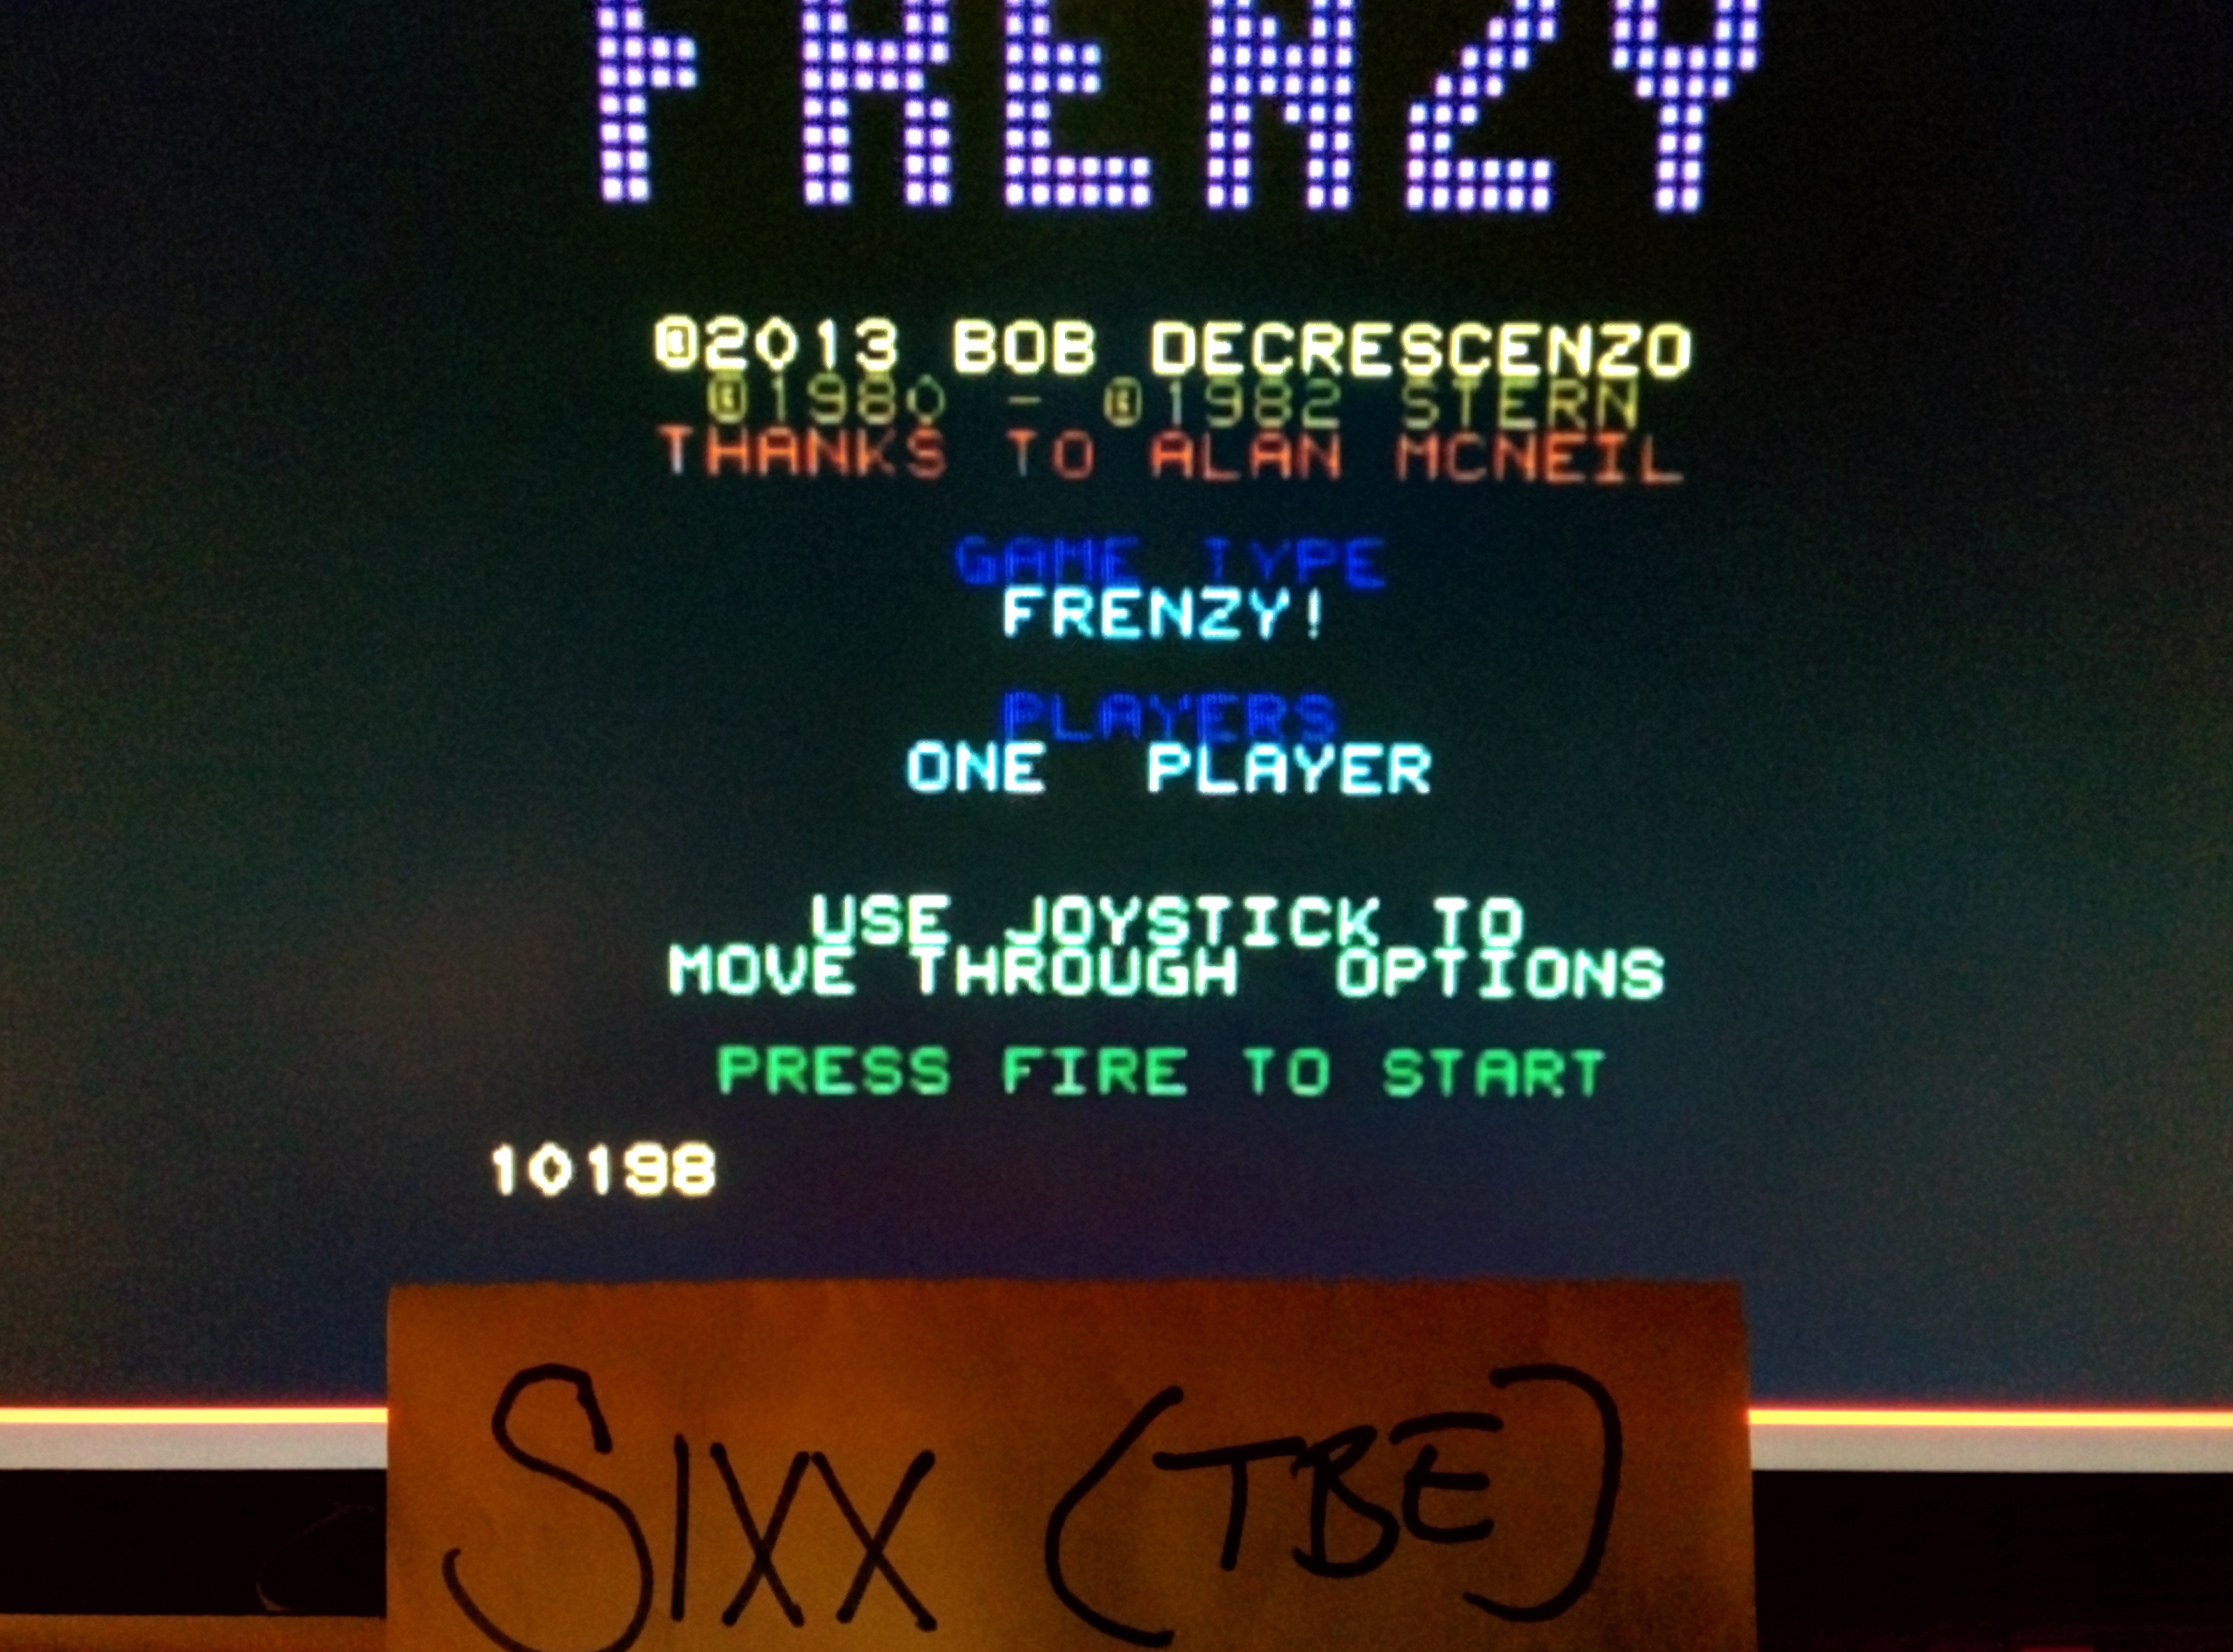 Sixx: Frenzy (Atari 7800 Emulated) 10,198 points on 2014-08-09 15:42:09